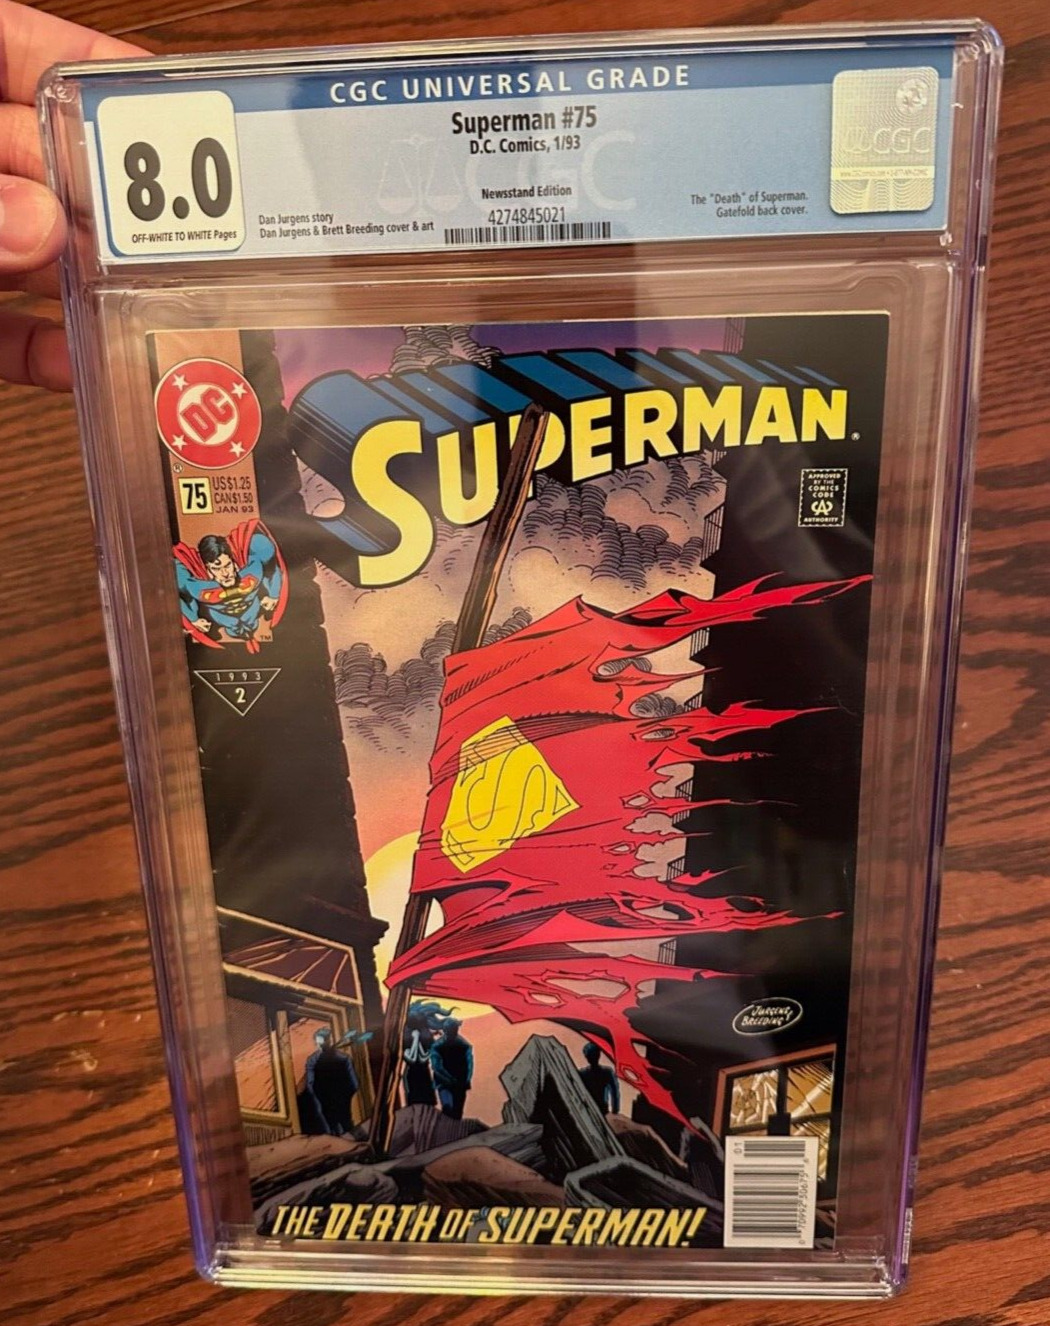 SUPERMAN #75 - CGC 8.0 - NEWSSTAND DEATH OF SUPERMAN 1/93 1st Printing